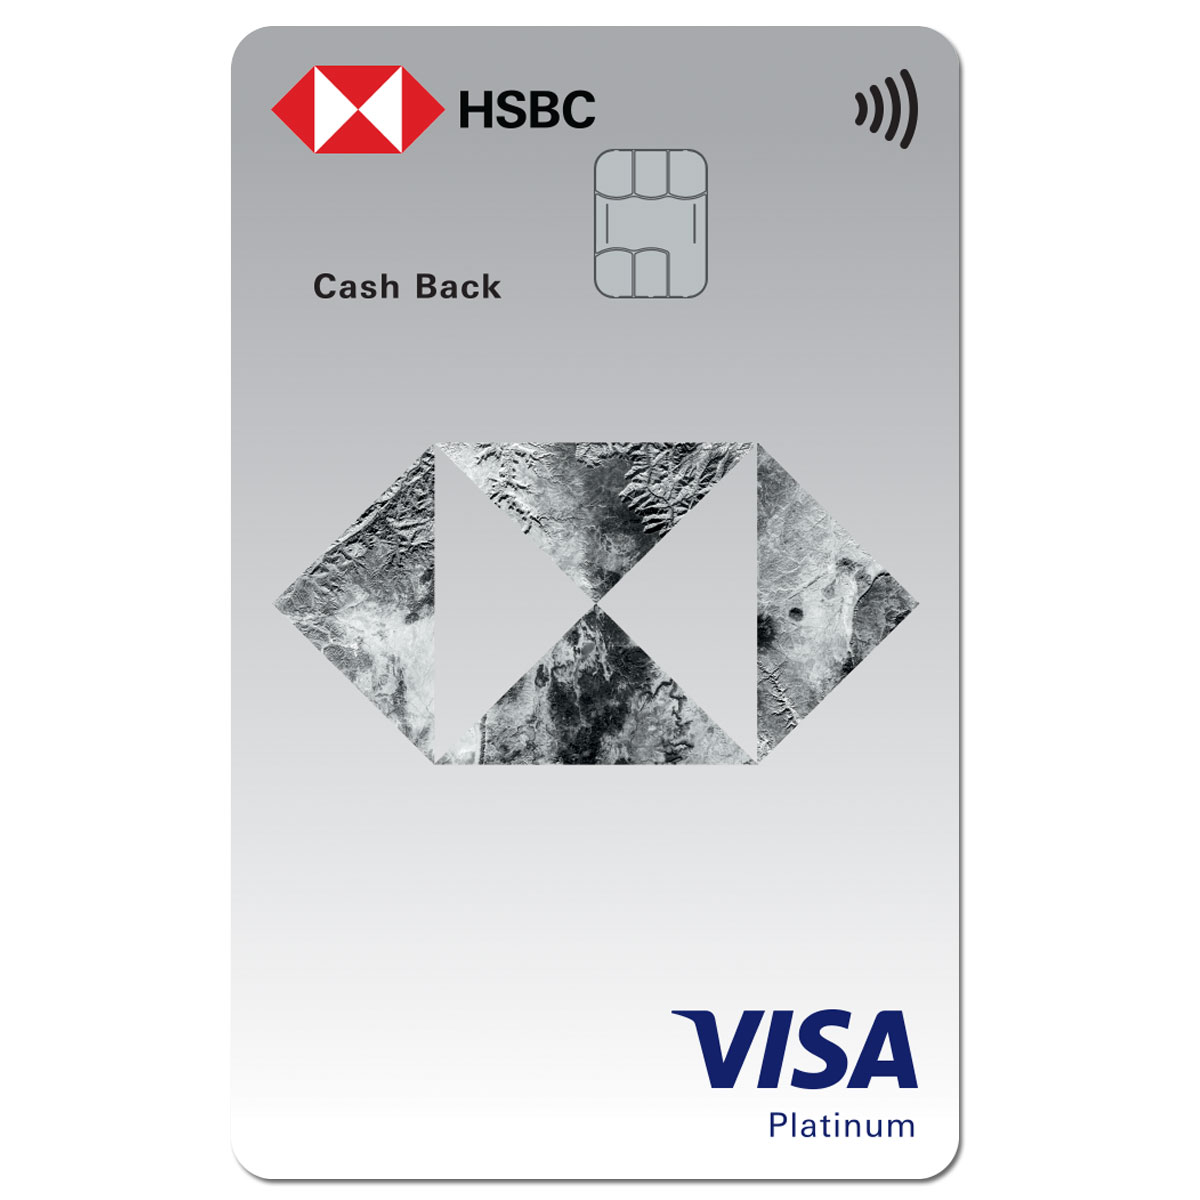 free-samsonite-luggage-or-s-150-cash-rebate-with-hsbc-credit-card-the